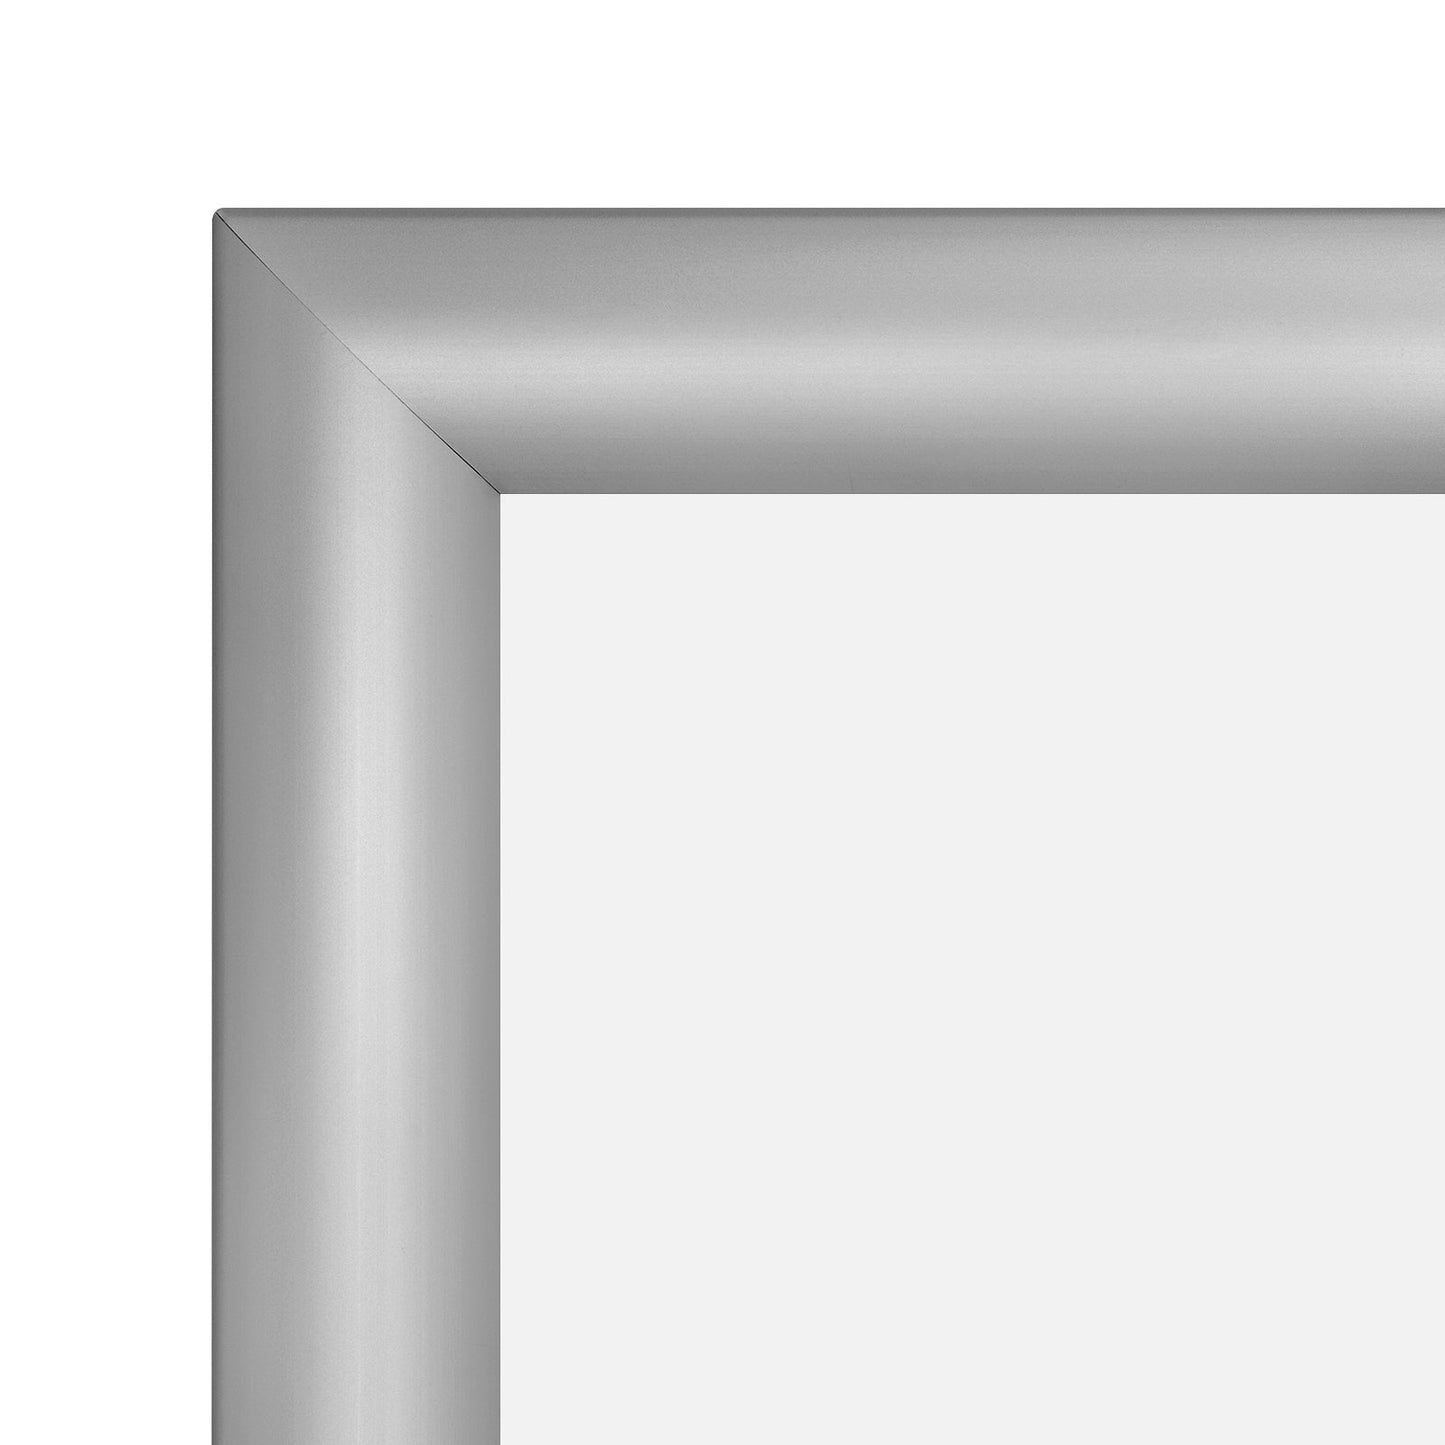 17x23 Silver SnapeZo® Snap Frame - 1.2" Profile